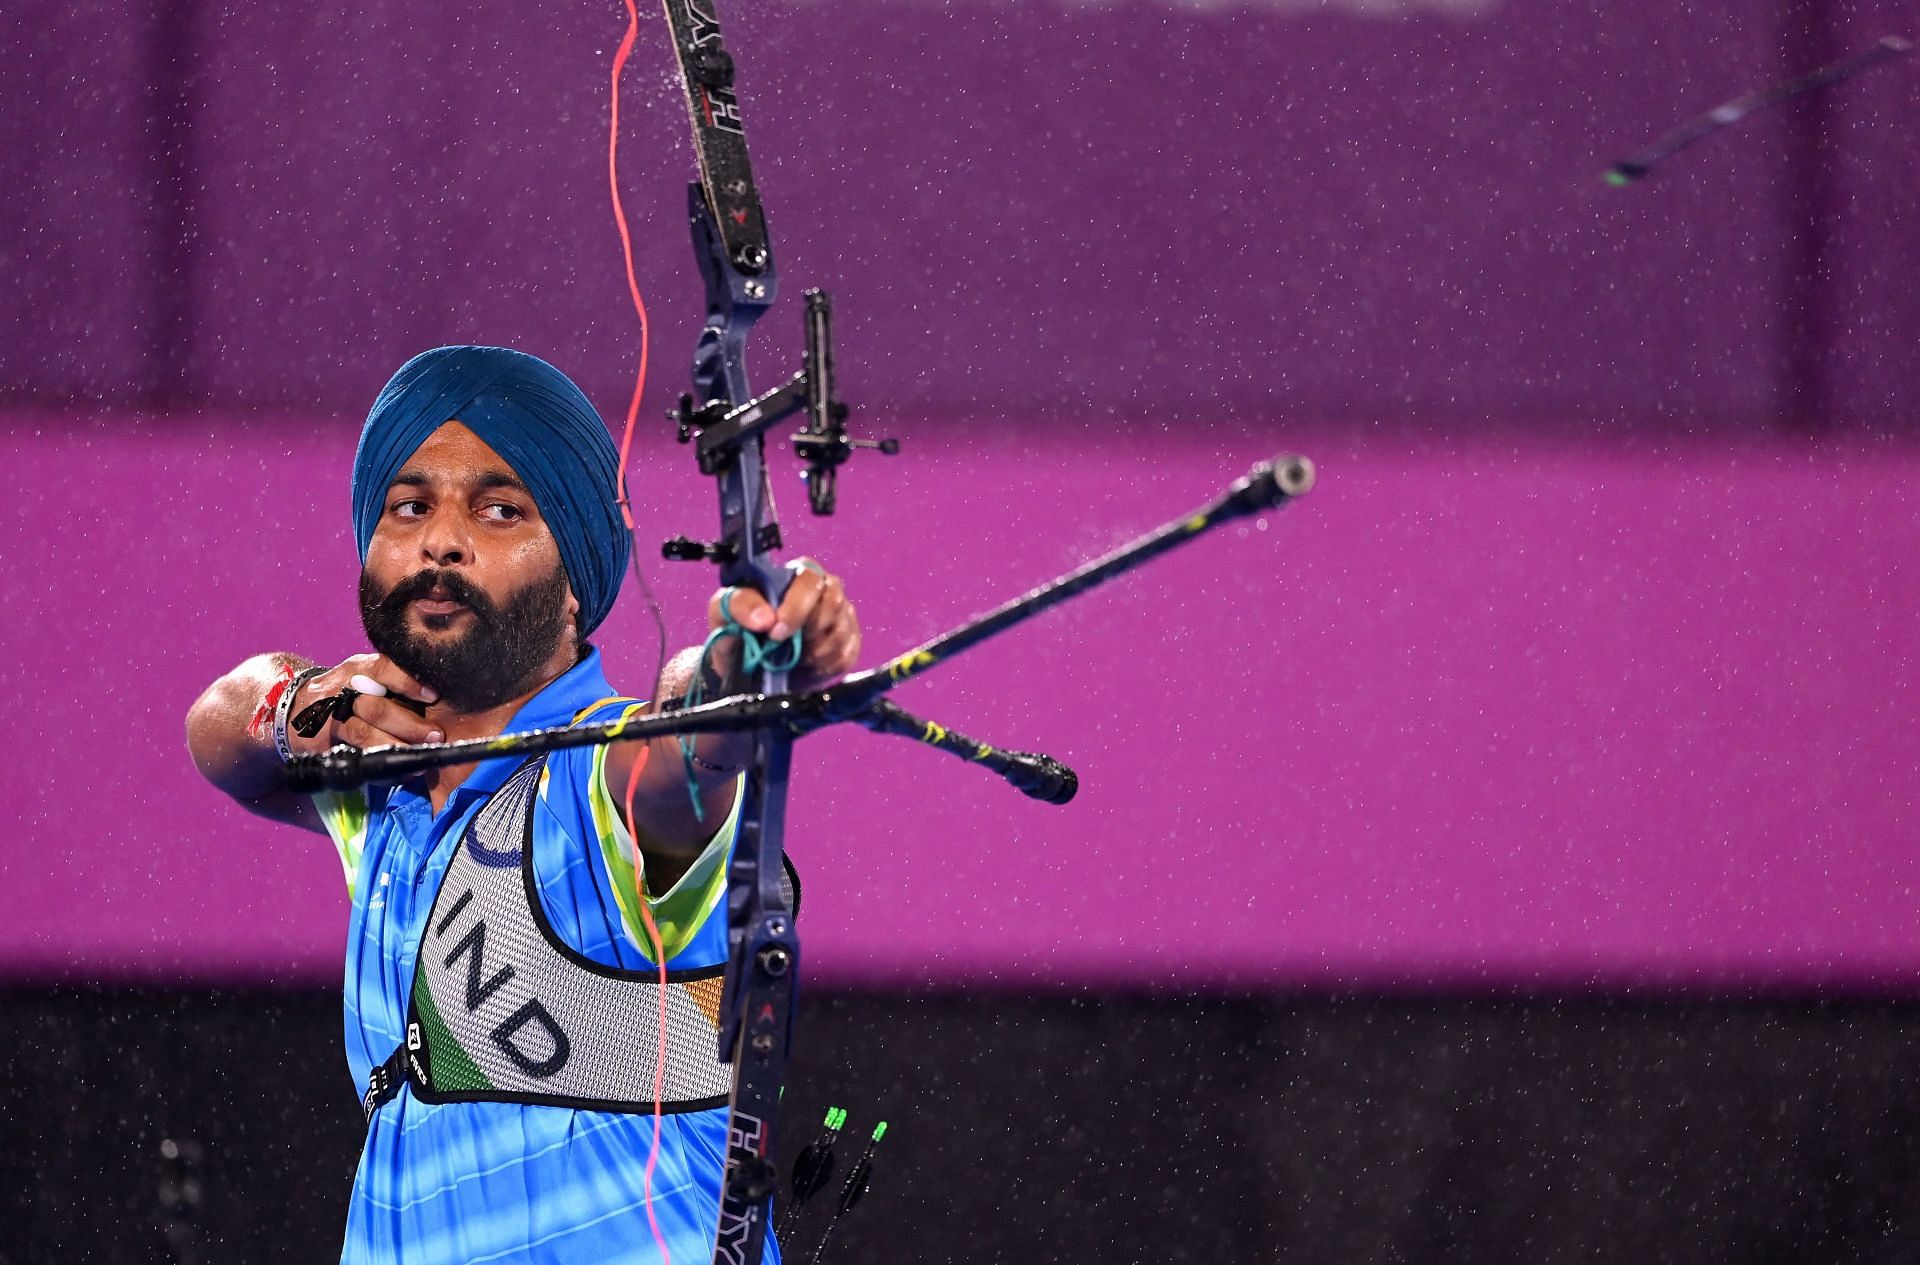 Harvinder Singh in action at 2020 Tokyo Paralympics